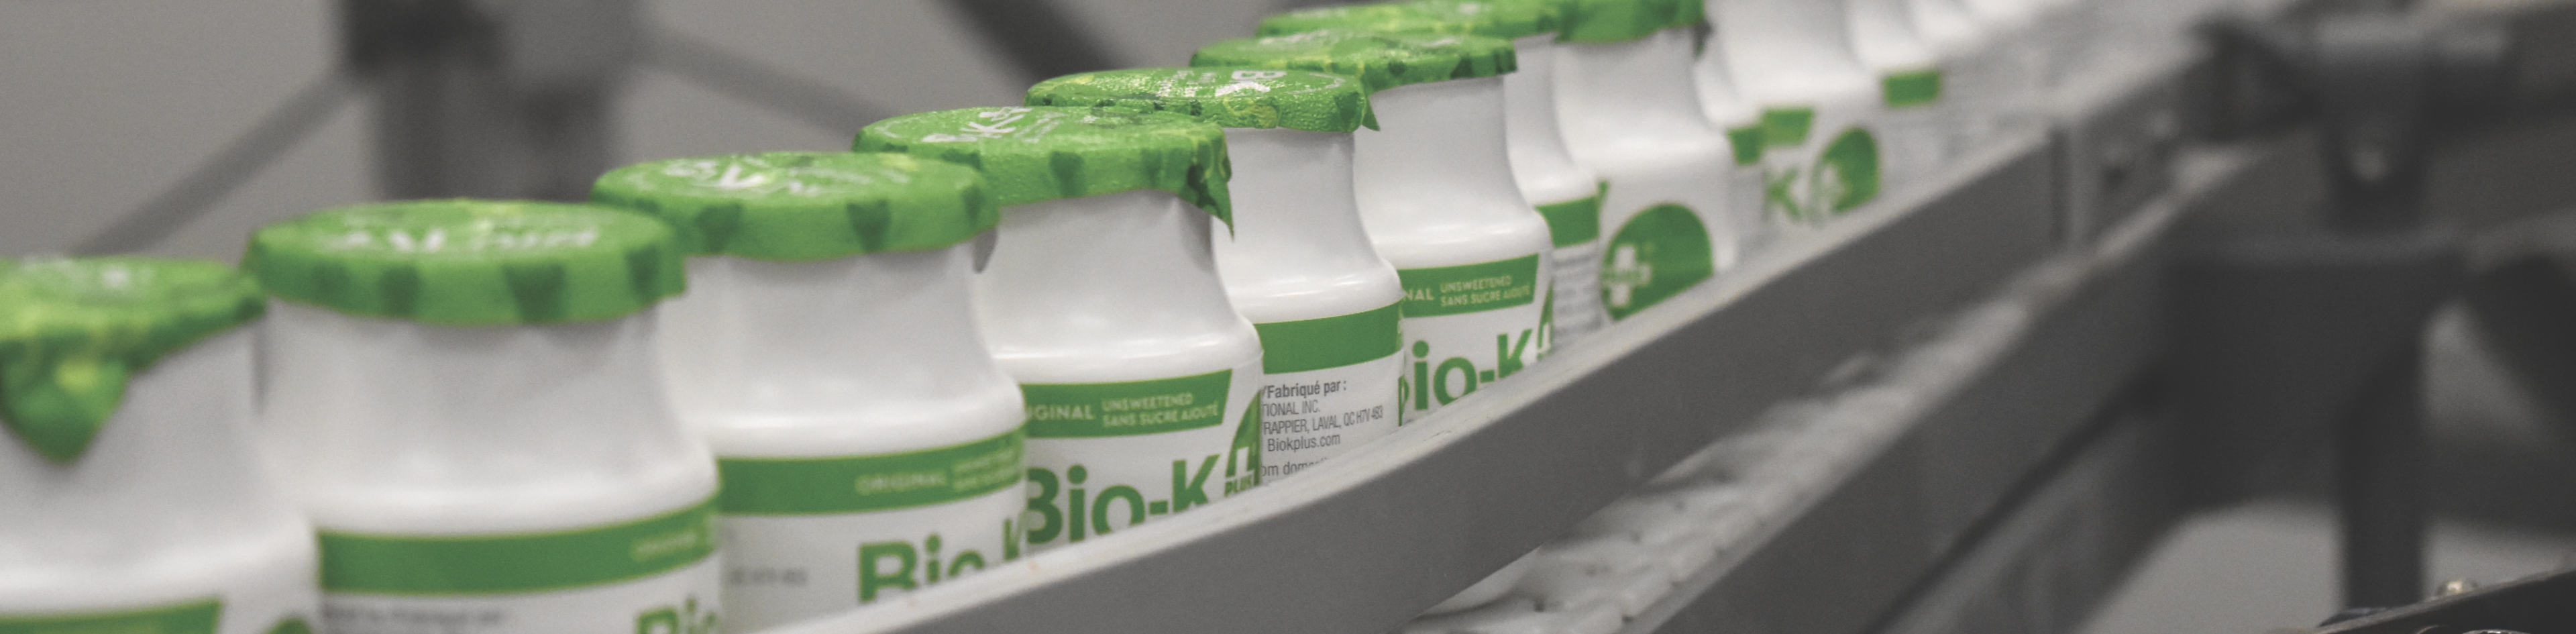 Bio-K+'s drinkable production line